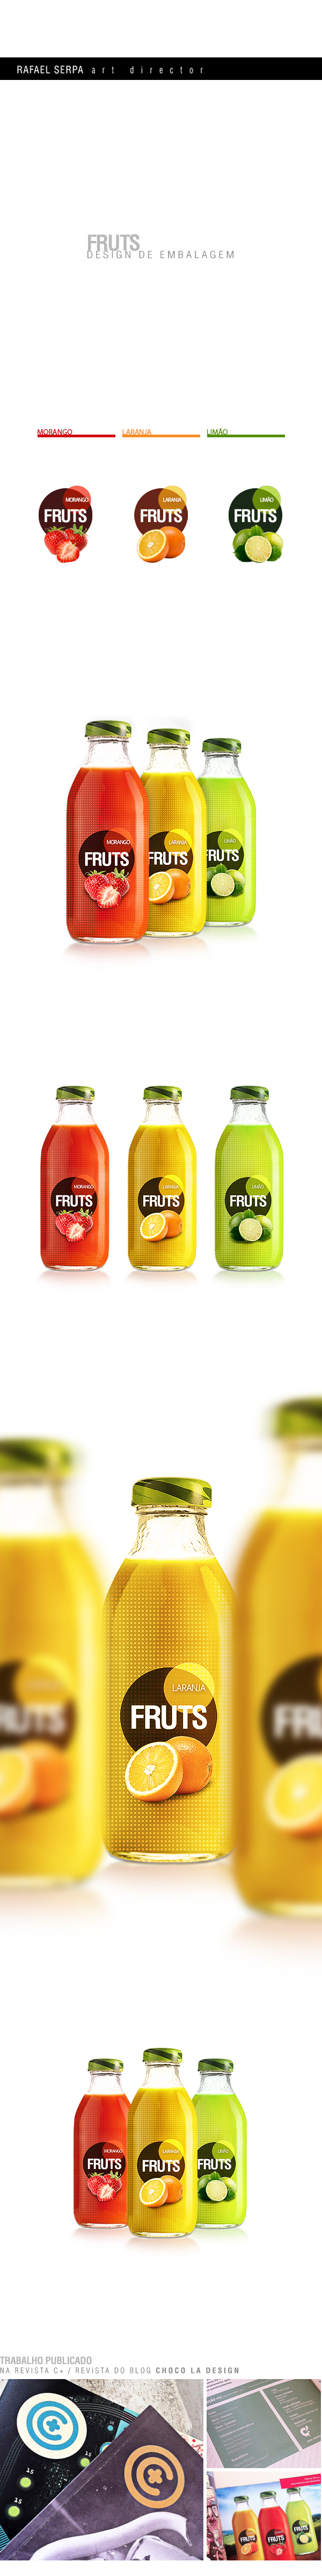 fruts juice design produto embalagem suco Rafael Serpa anapolis Goiás Pack laranja Suco Natural goiânia